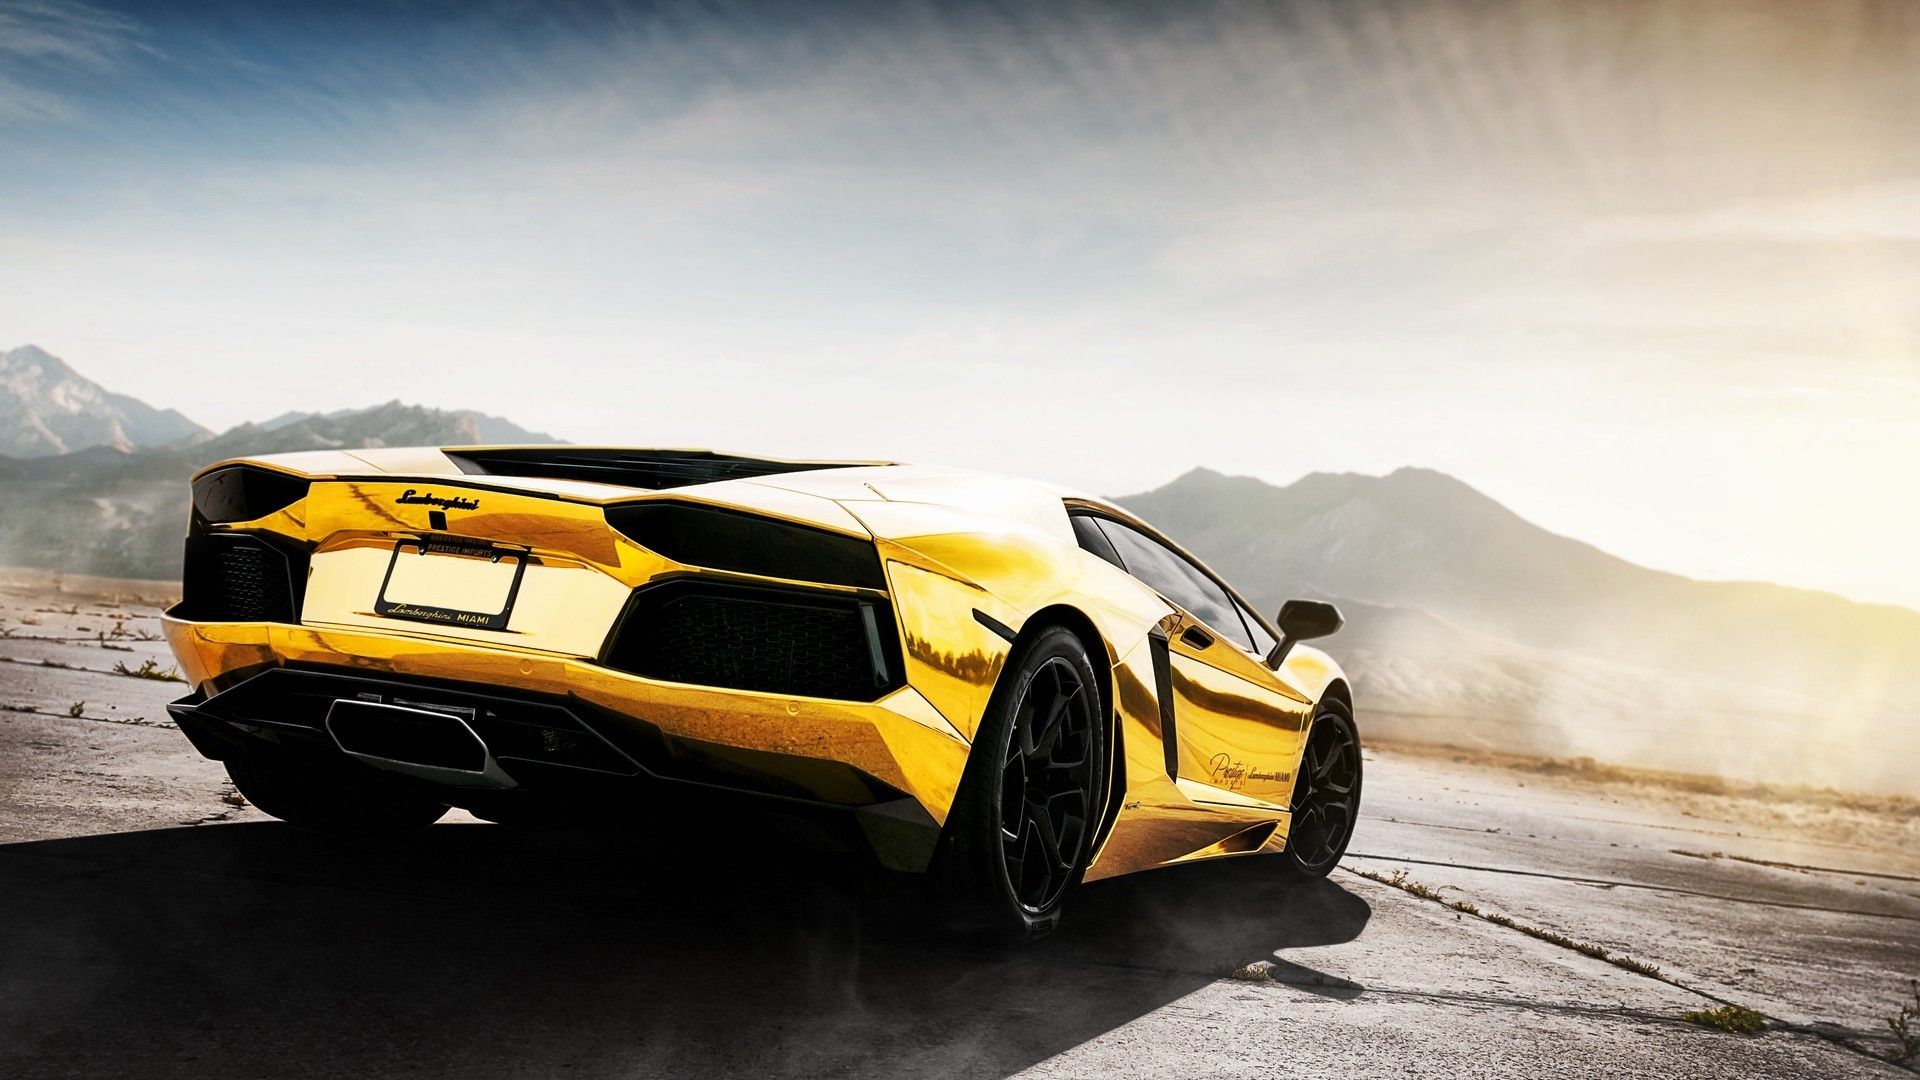 Wallpaper Yellow Lamborghini Aventador on Road During Daytime, Background -  Download Free Image